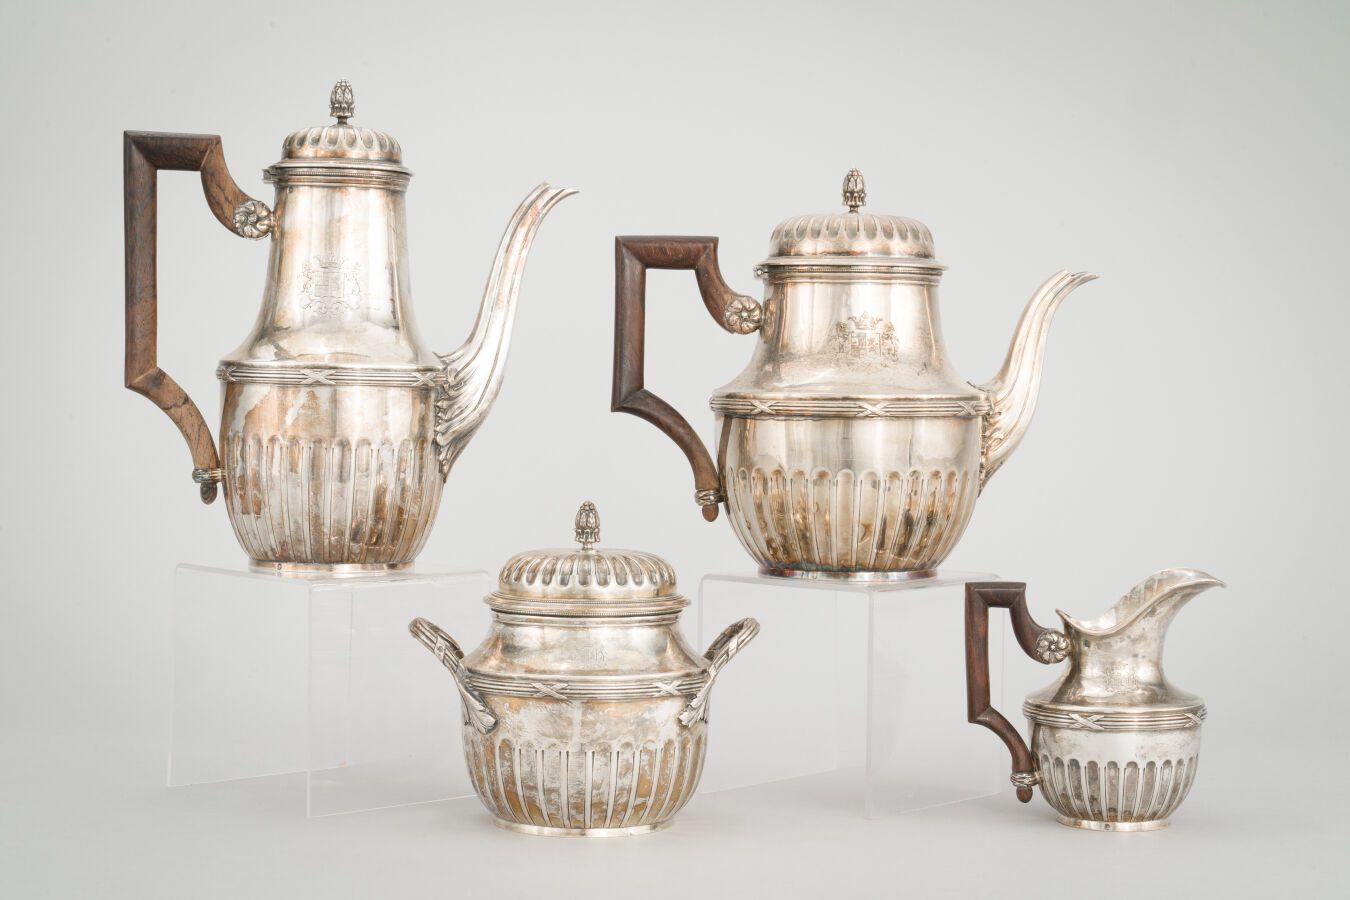 Null 57.银制(950/1000)茶咖啡服务，带状和凹槽的带子，下面刻有双纹章

侯爵的皇冠。握柄为异国情调的木材。

它包括一个咖啡壶，一个茶壶，一个有&hellip;